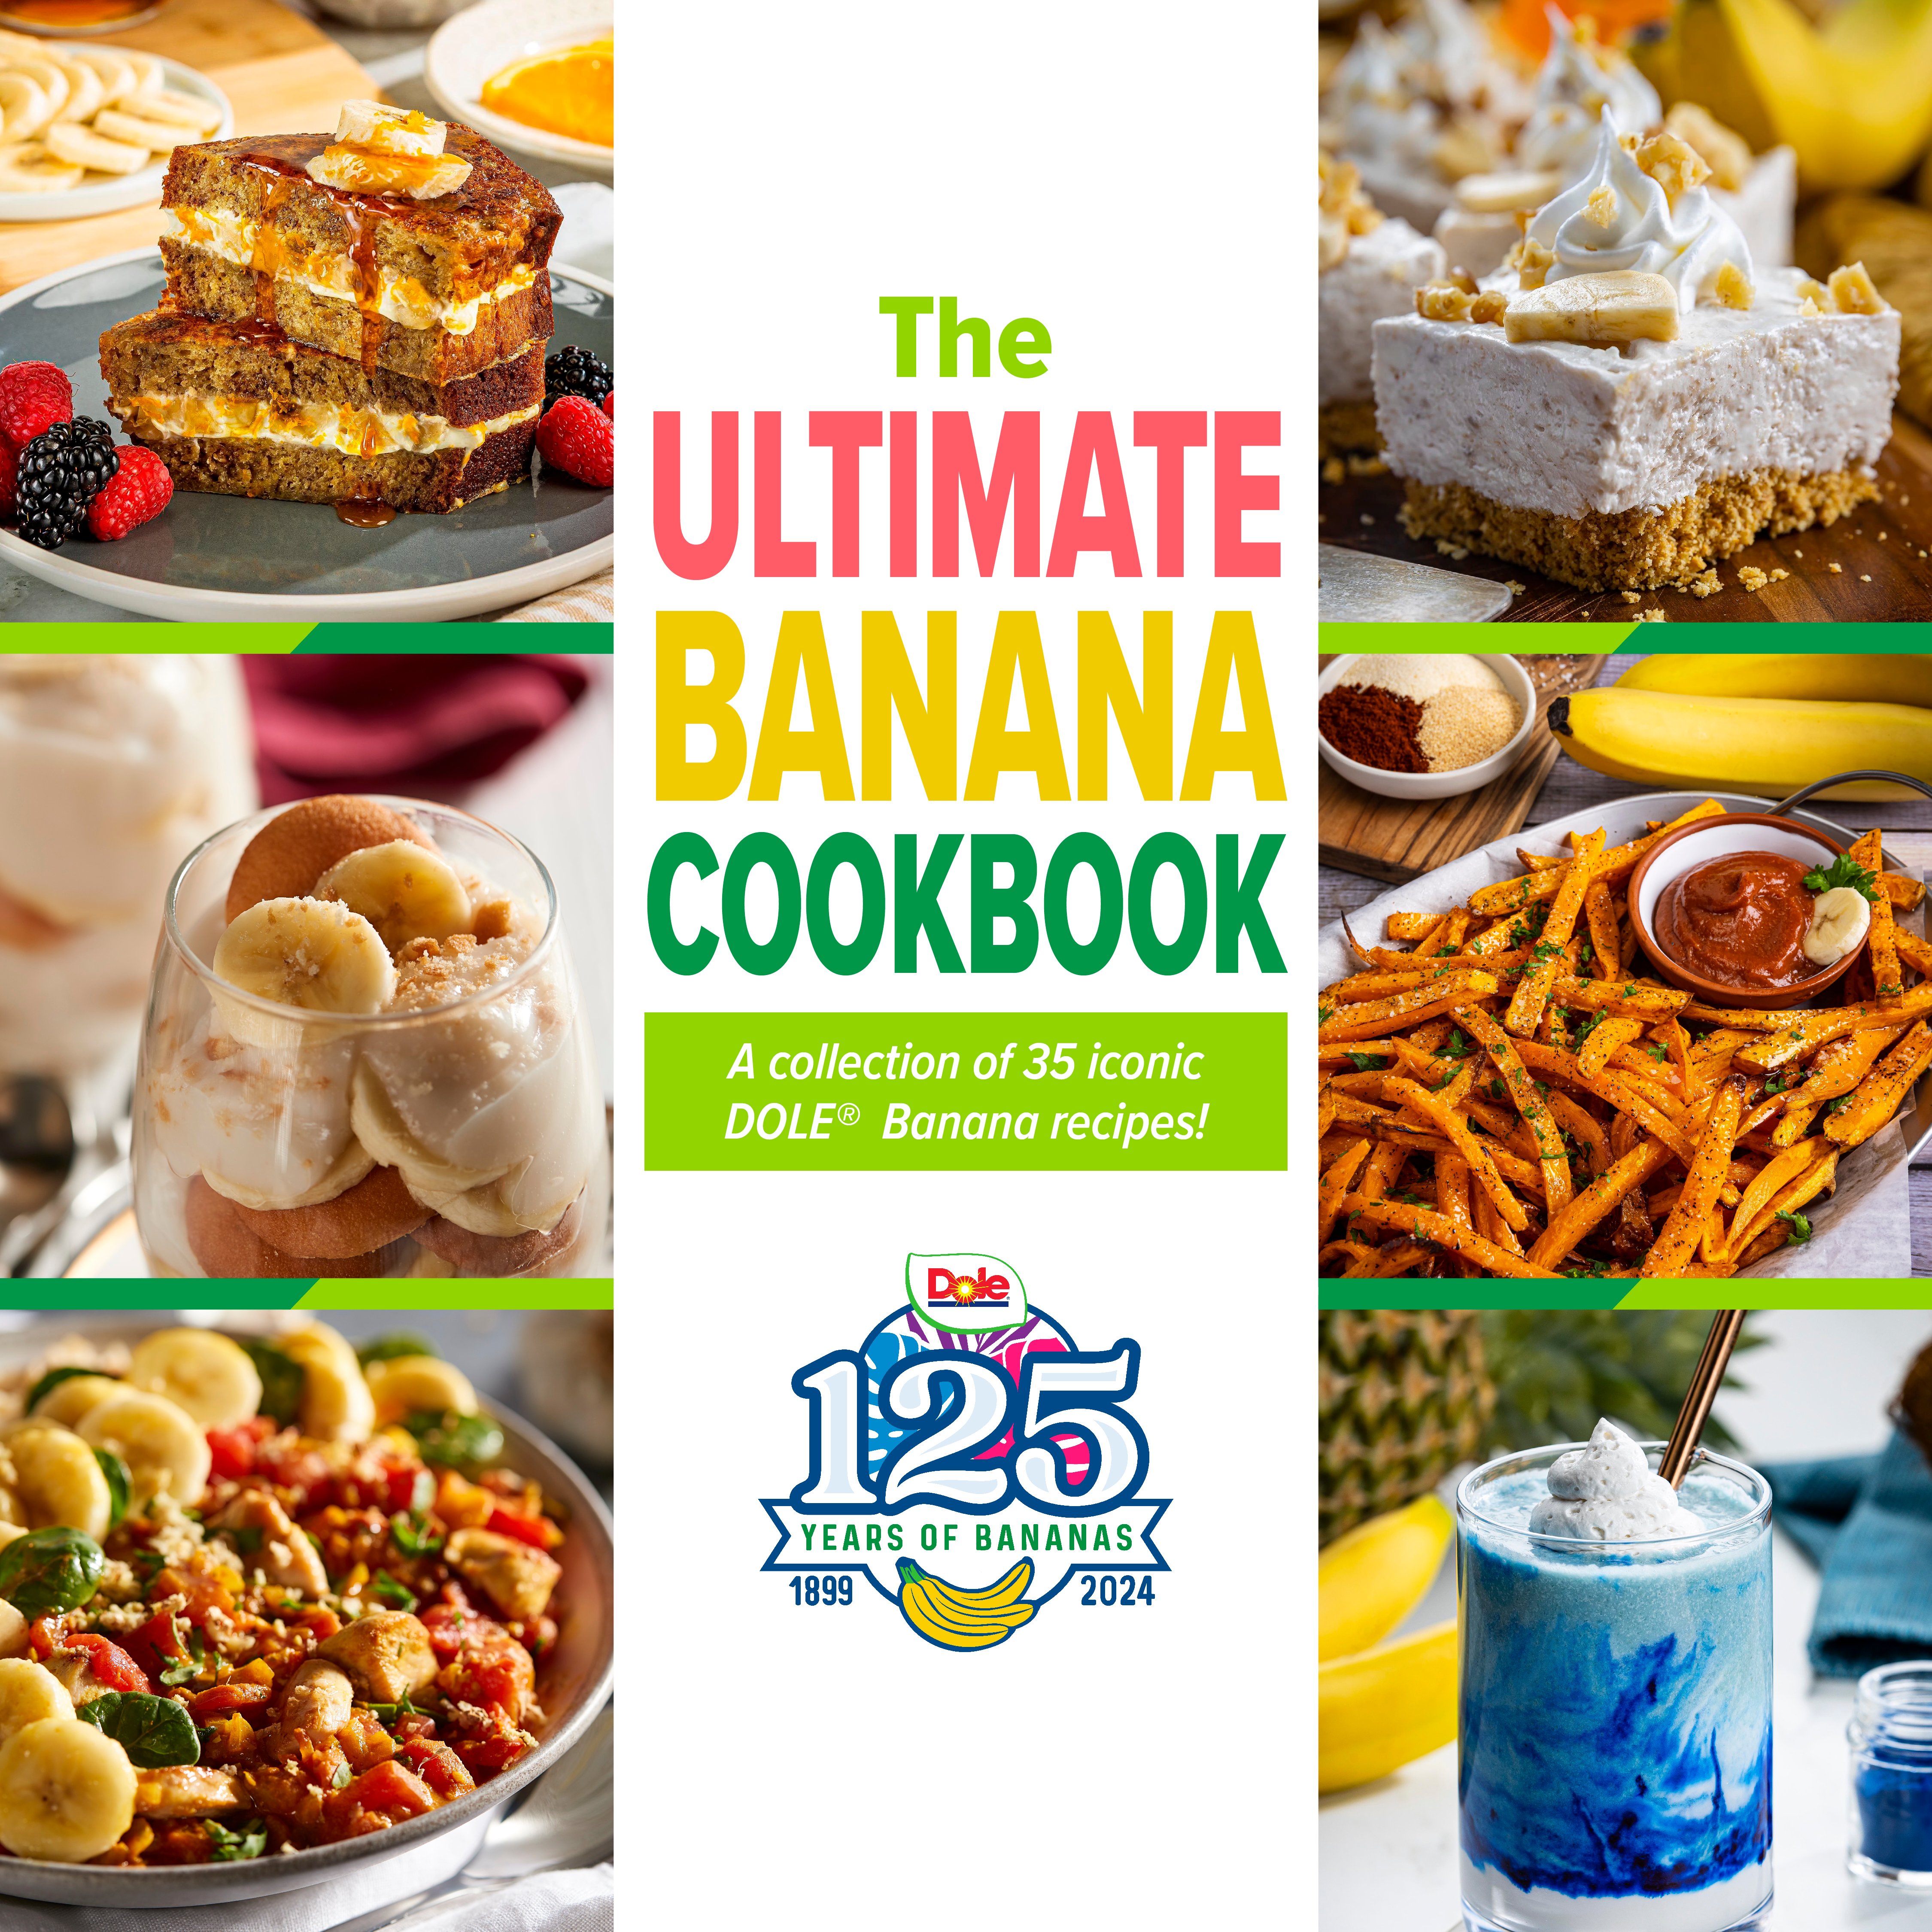 The Ultimate Banana Cookbook